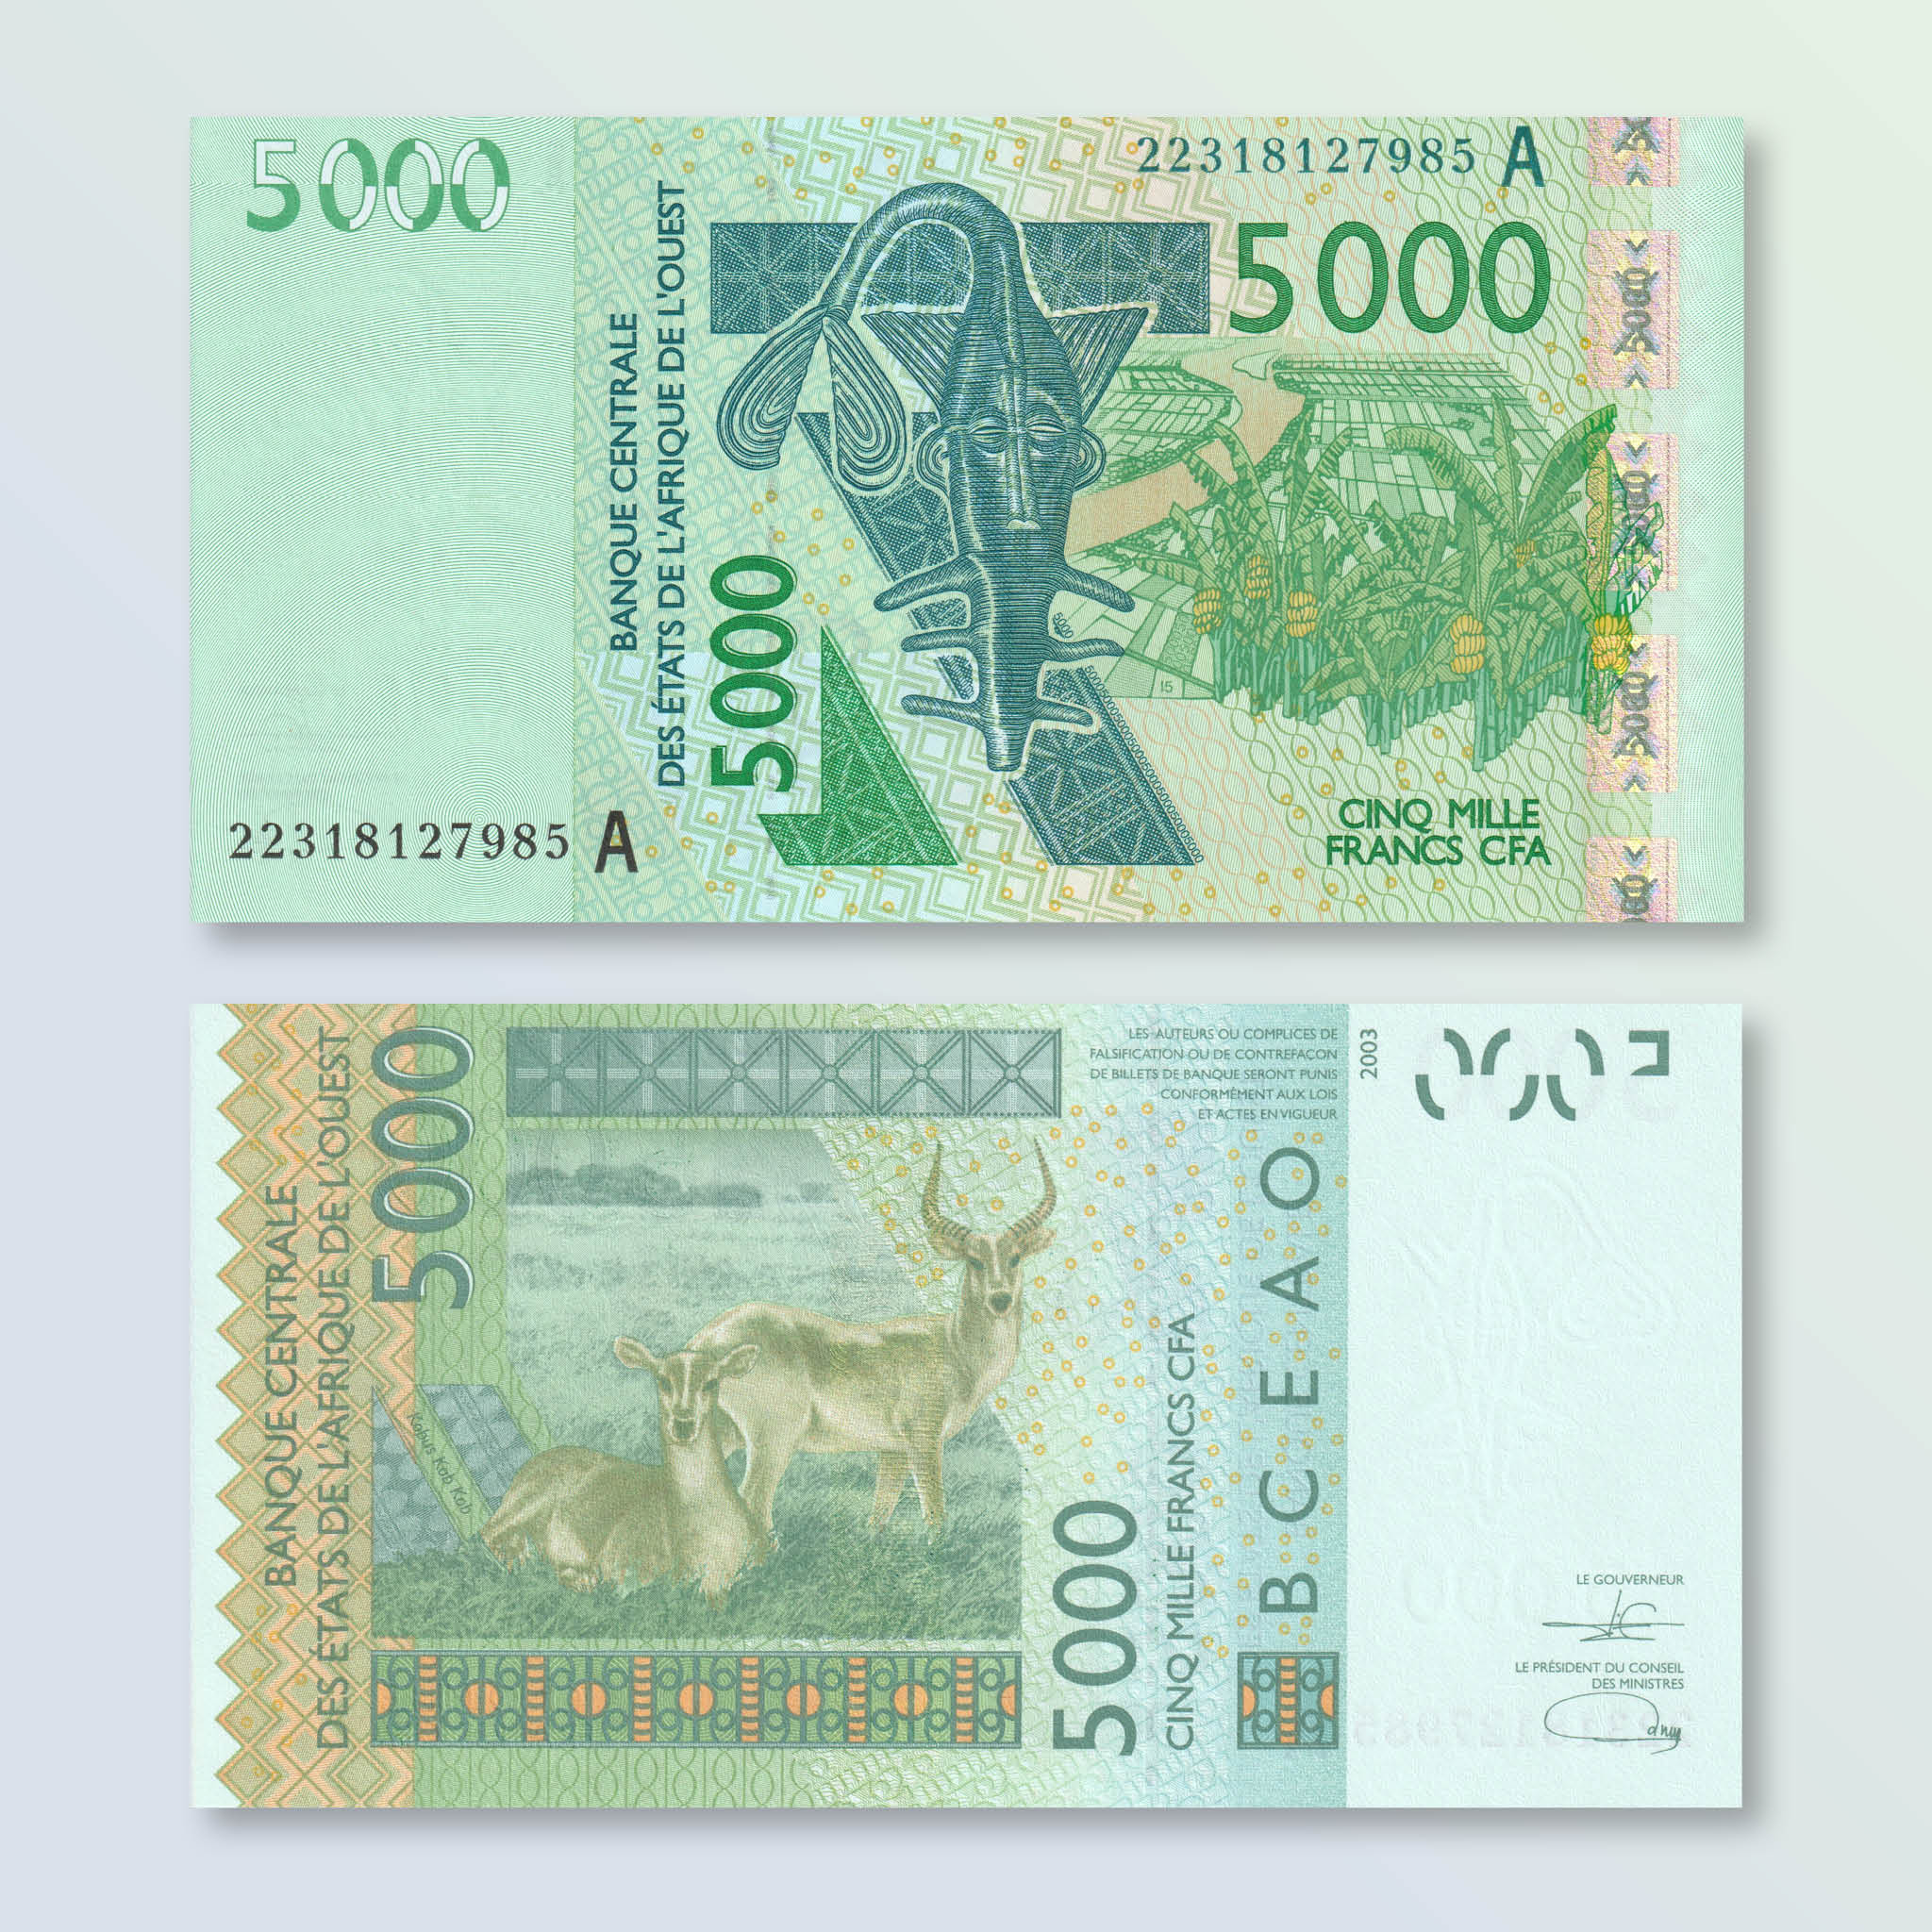 West African States, Ivory Coast, 5000 Francs, 2022, B123Av, P117A, UNC - Robert's World Money - World Banknotes